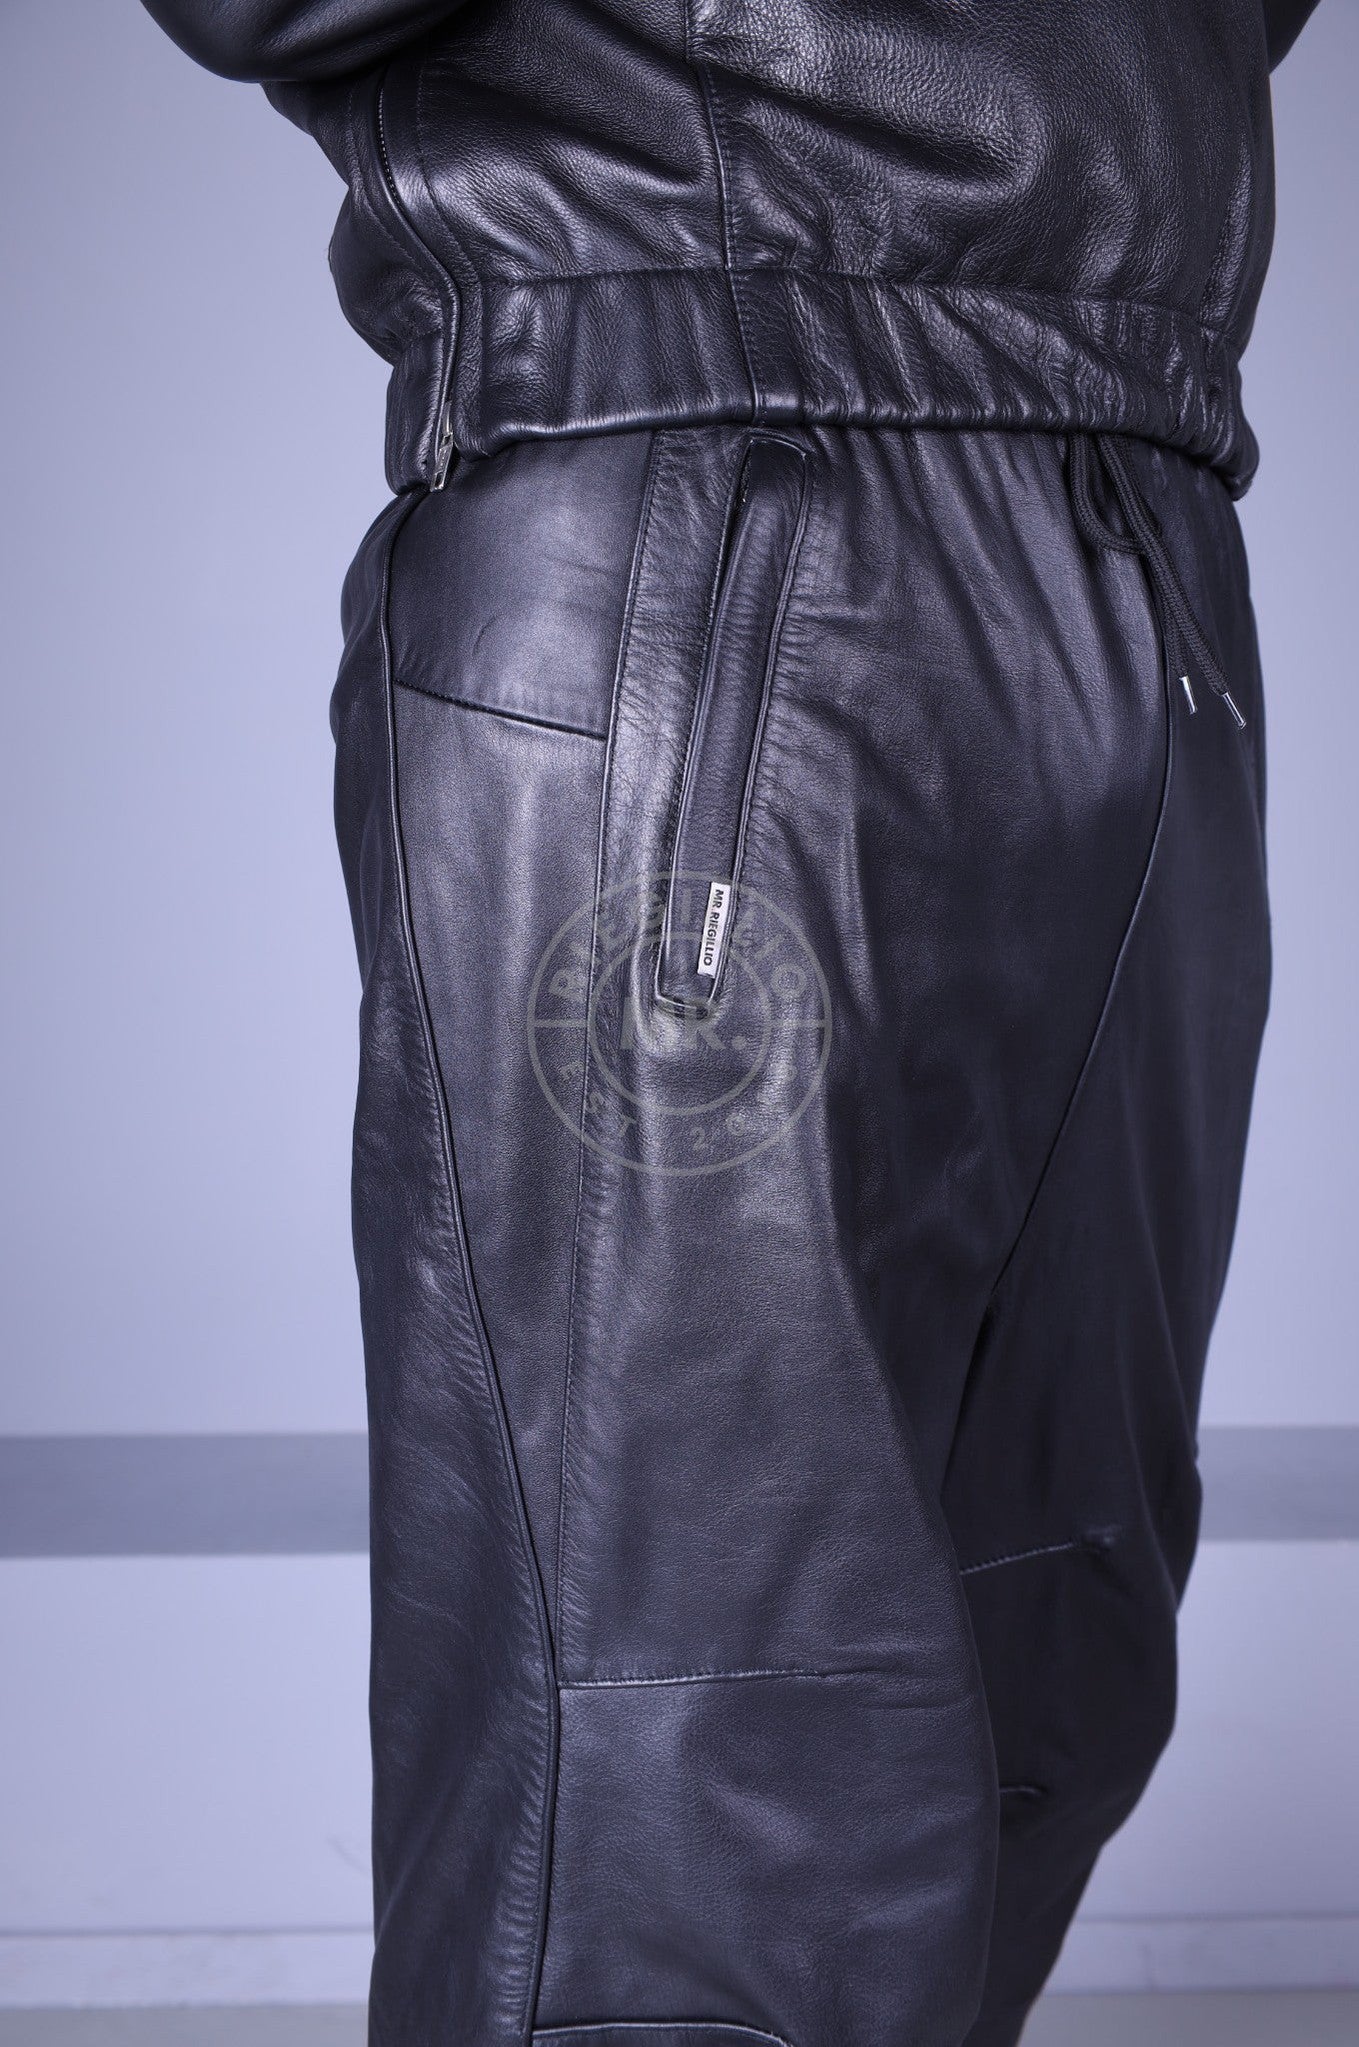 "Xtreme" Leather Pants - Full Black